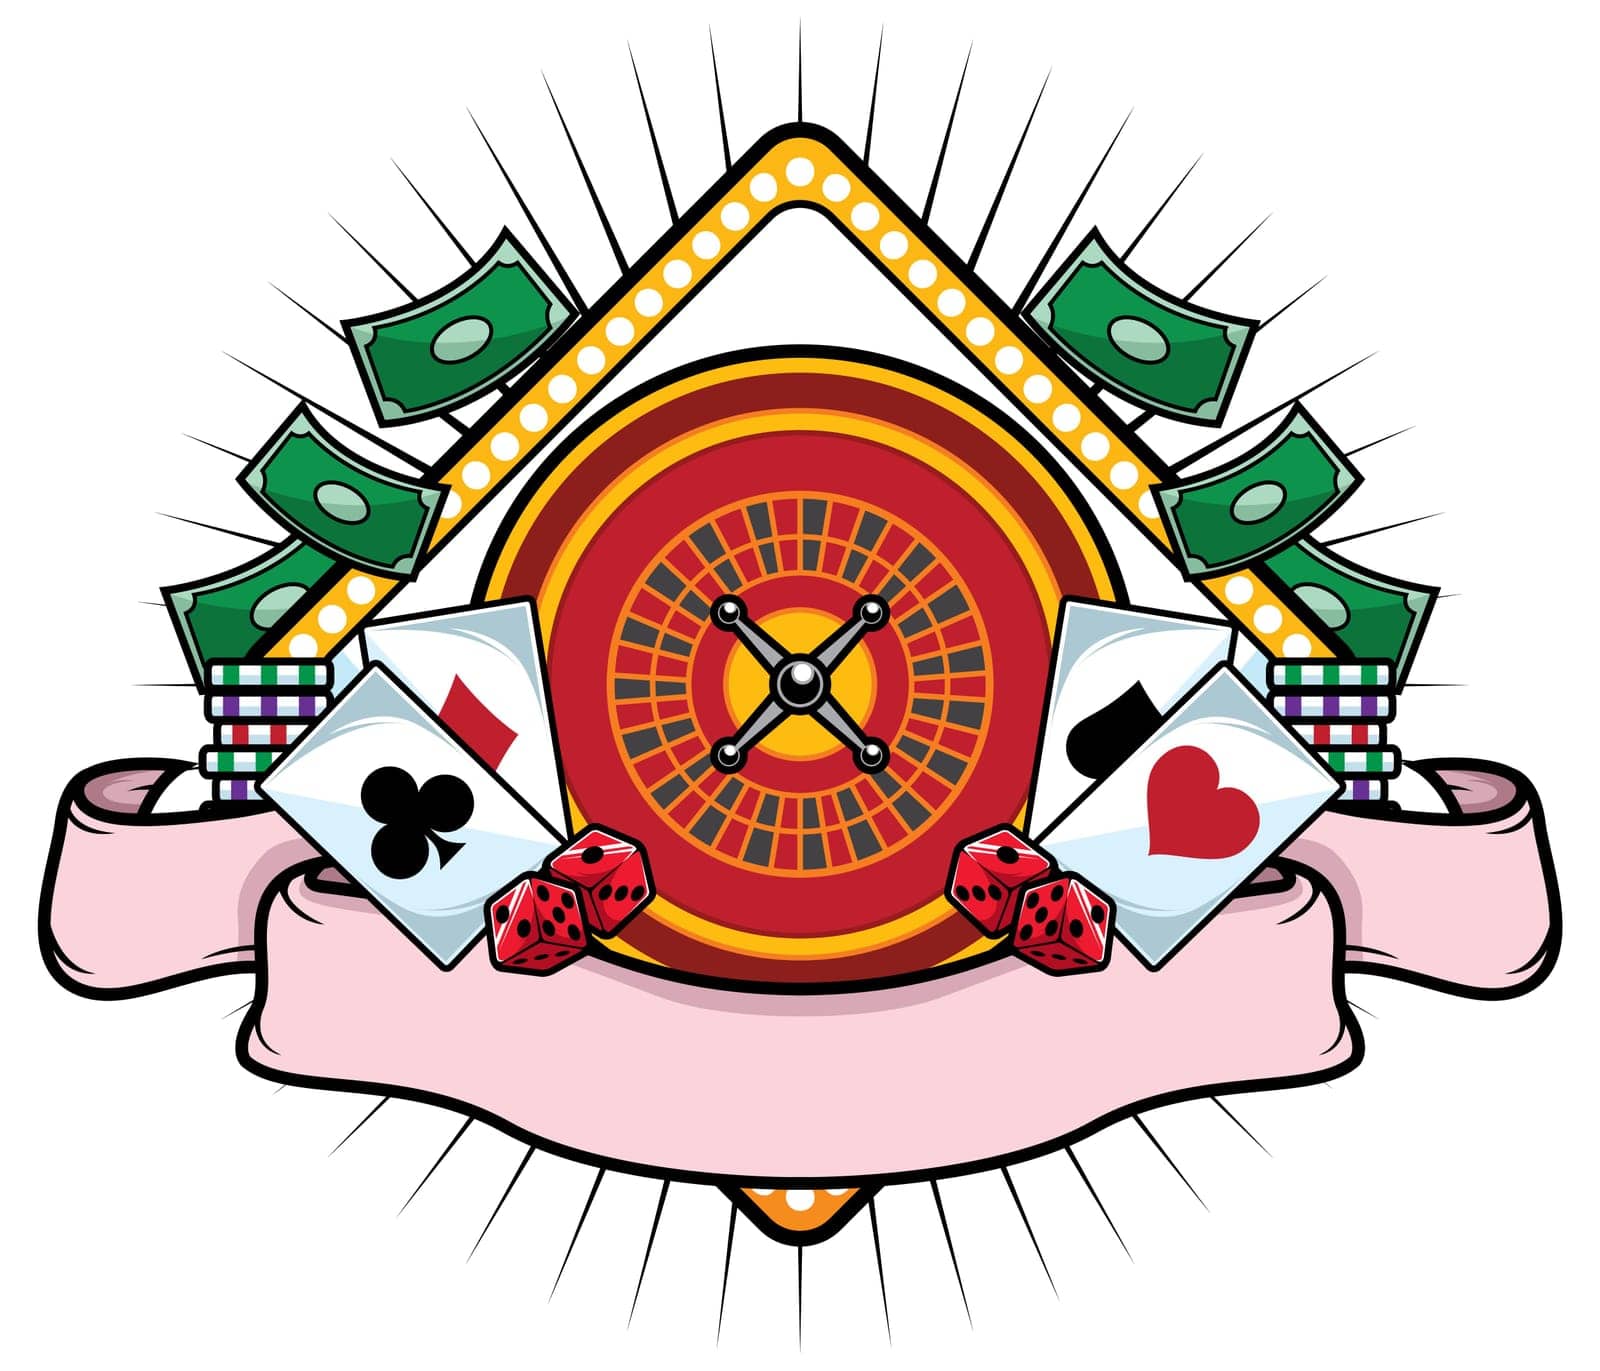 Casino Mascot by Malchev